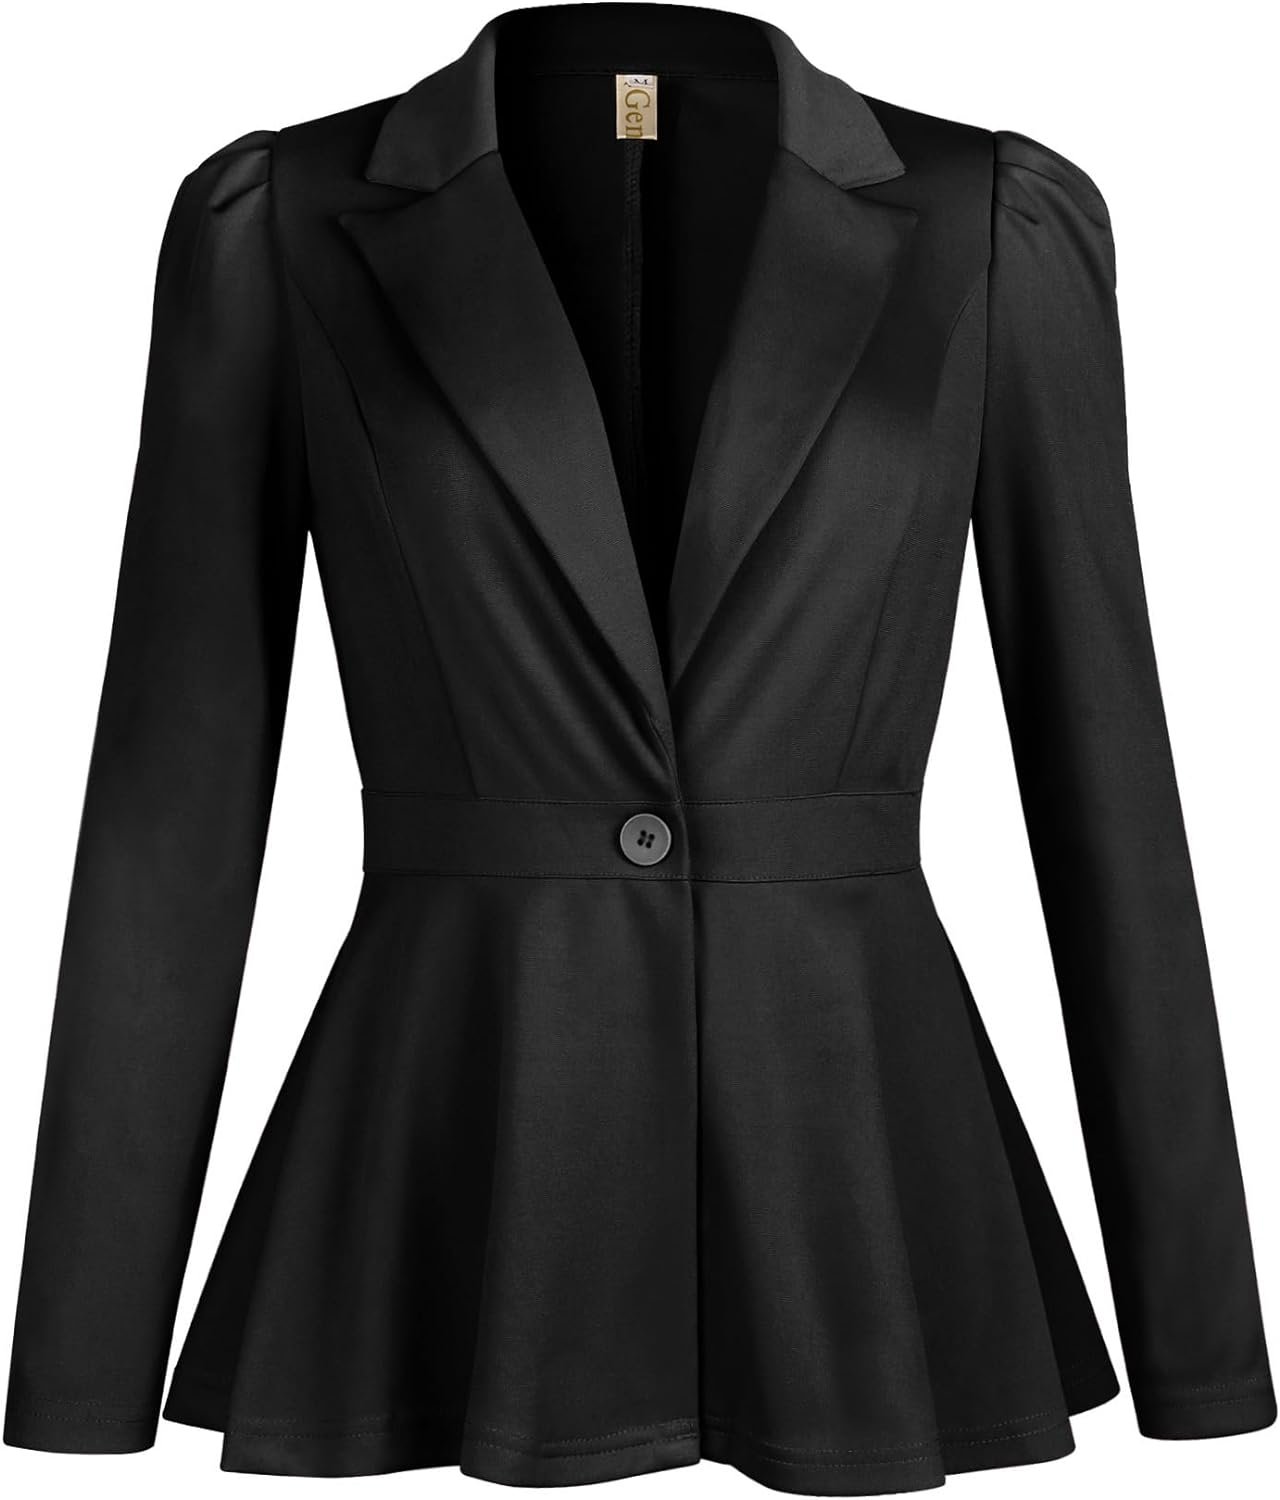 Genhoo Womens Business Casual Blazer Jackets Dressy Puff Sleeve Single Button Peplum Comfy Work Office Blazers